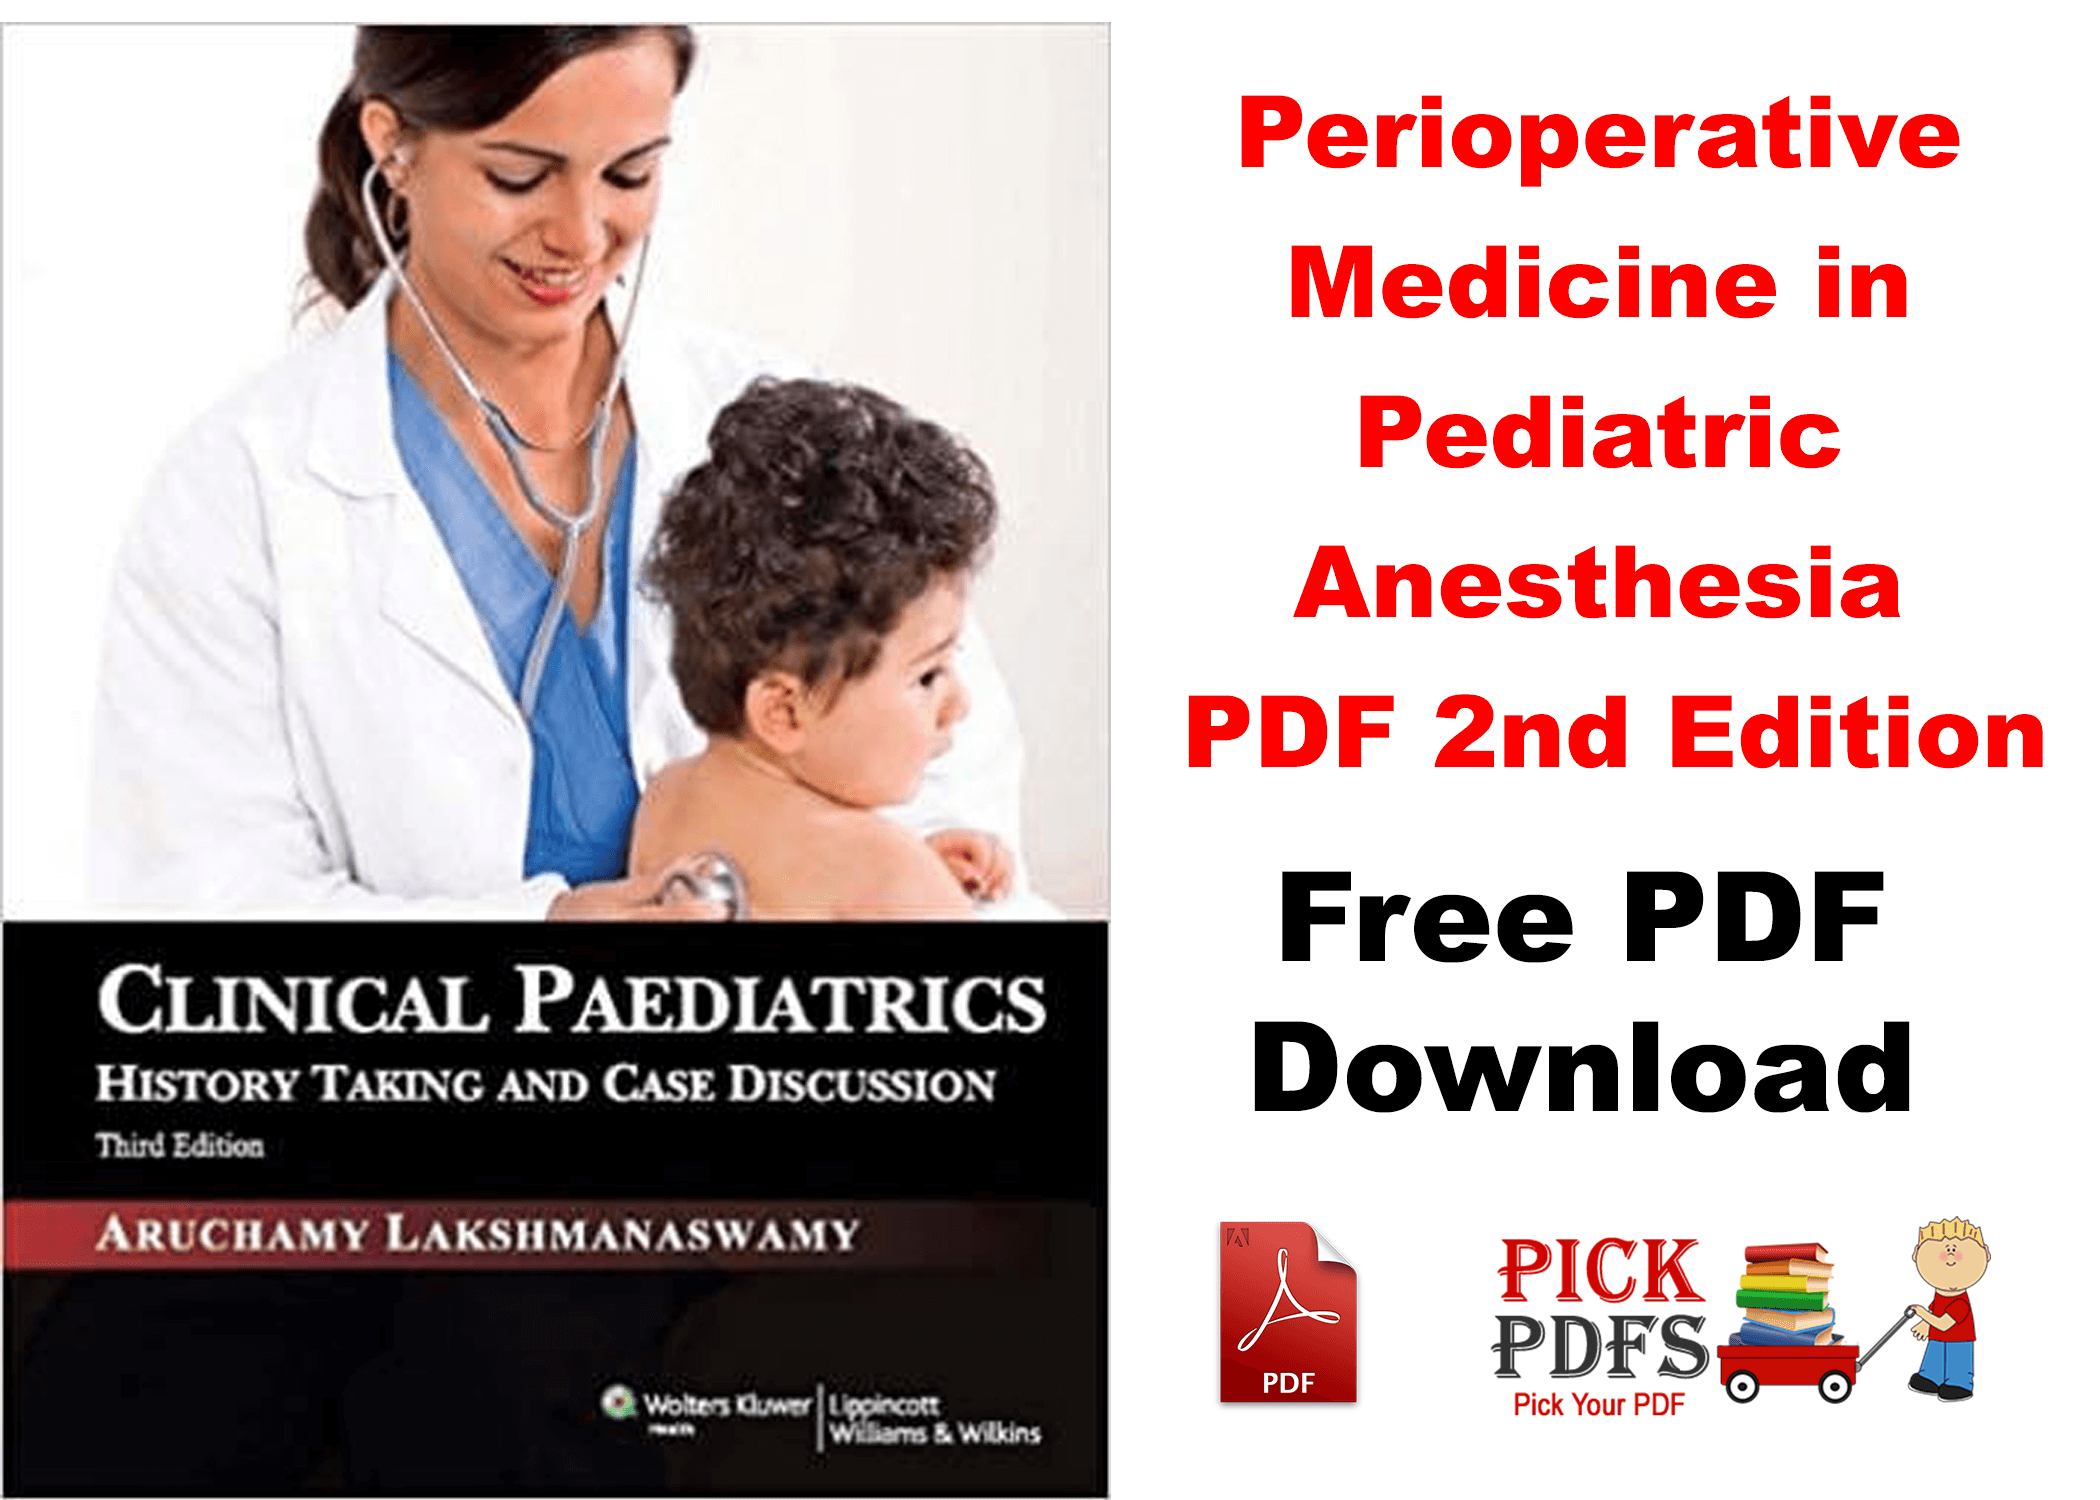 https://pickpdfs.com/perioperative-medicine-in-pediatric-anesthesia-pdf-ebook-free-download/